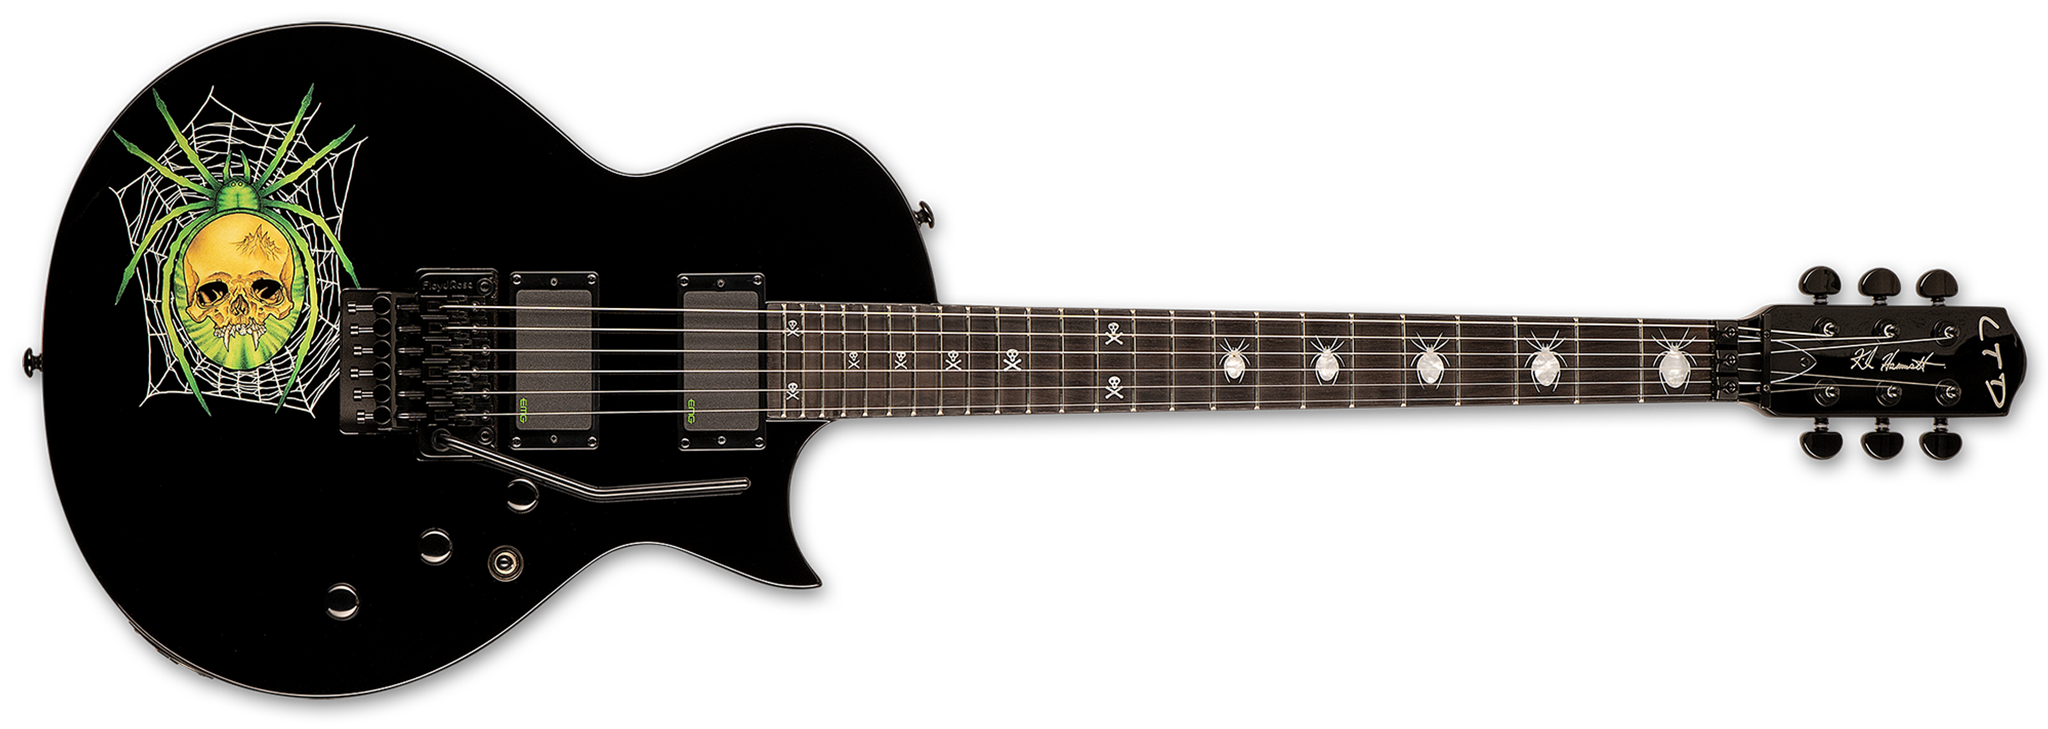 LTD 30th Anniversary KH-3 Spider 6-String Electric Guitar  